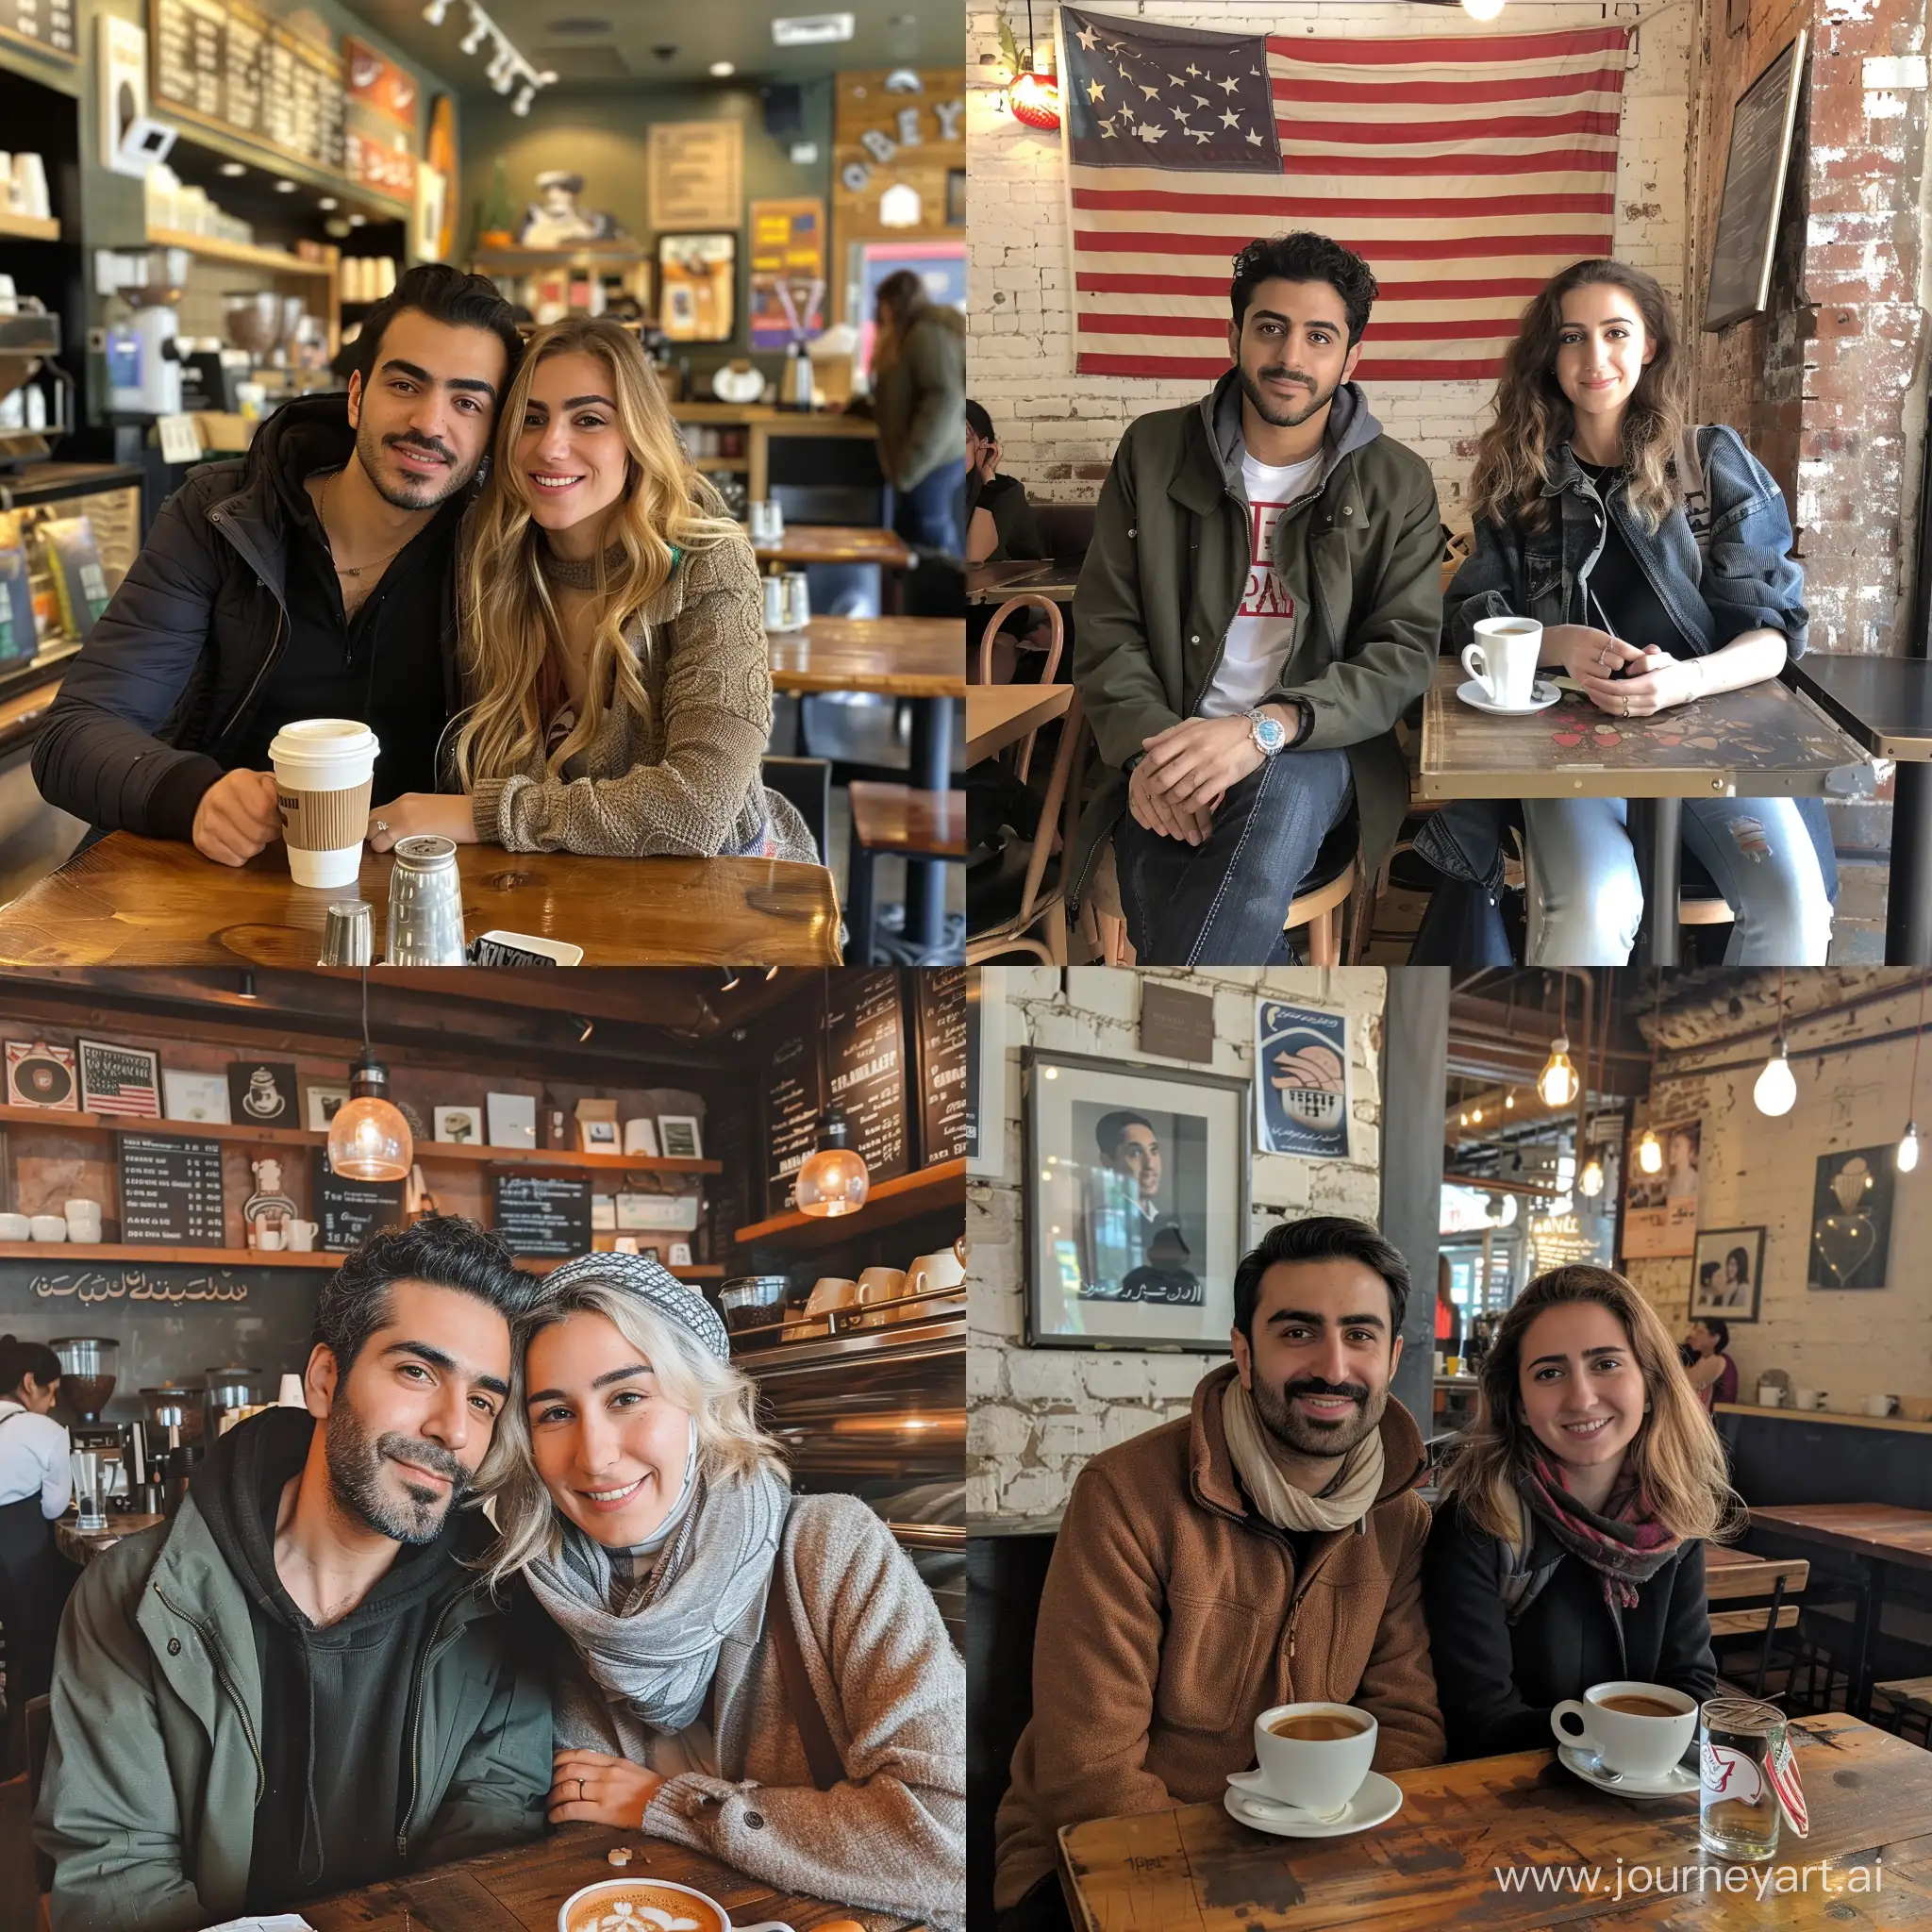 Iranian-Guy-and-American-Girlfriend-Enjoying-Coffee-Date-in-Cozy-Caf